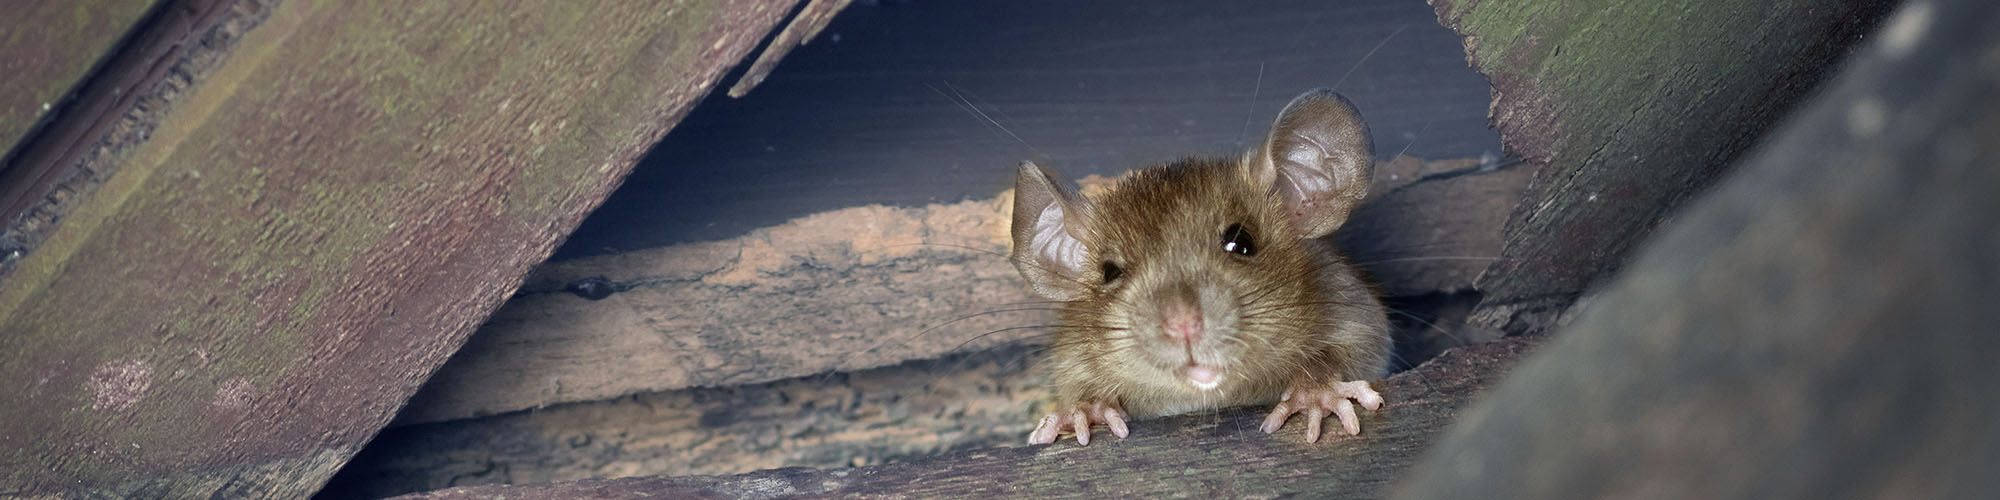 Nagerbekämpfung, Mäuse, Ratten